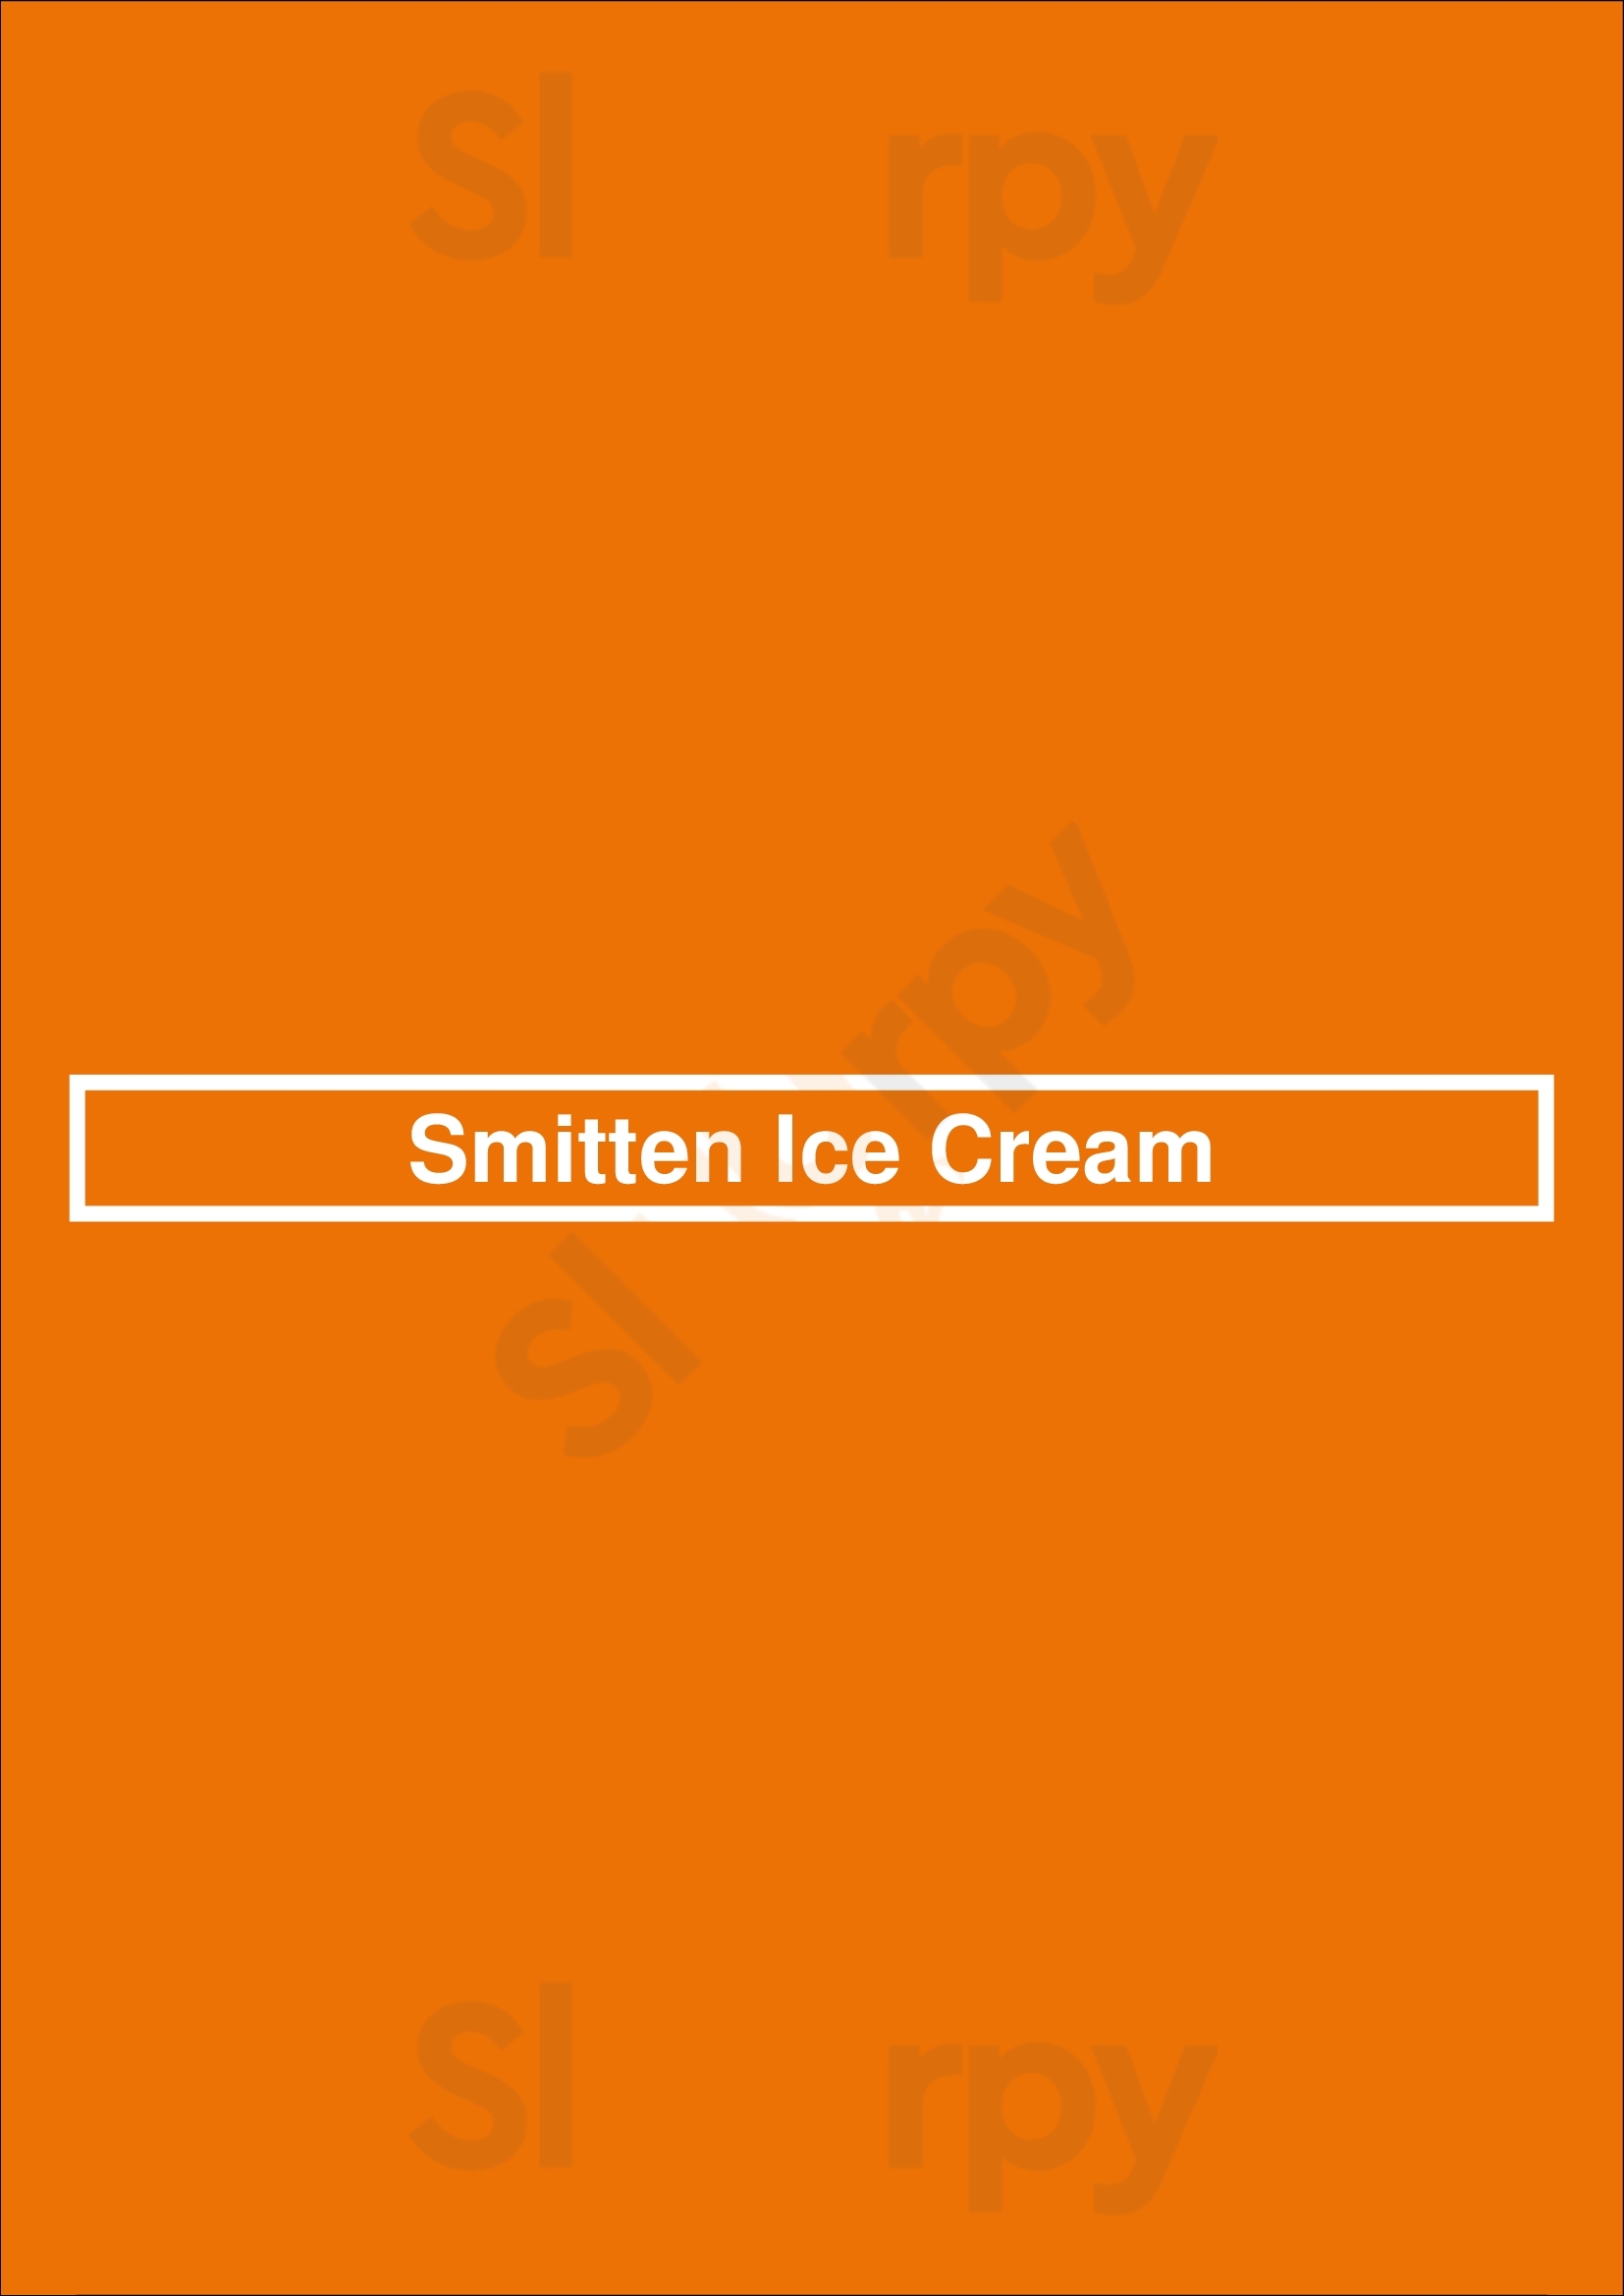 Smitten Ice Cream San Jose Menu - 1